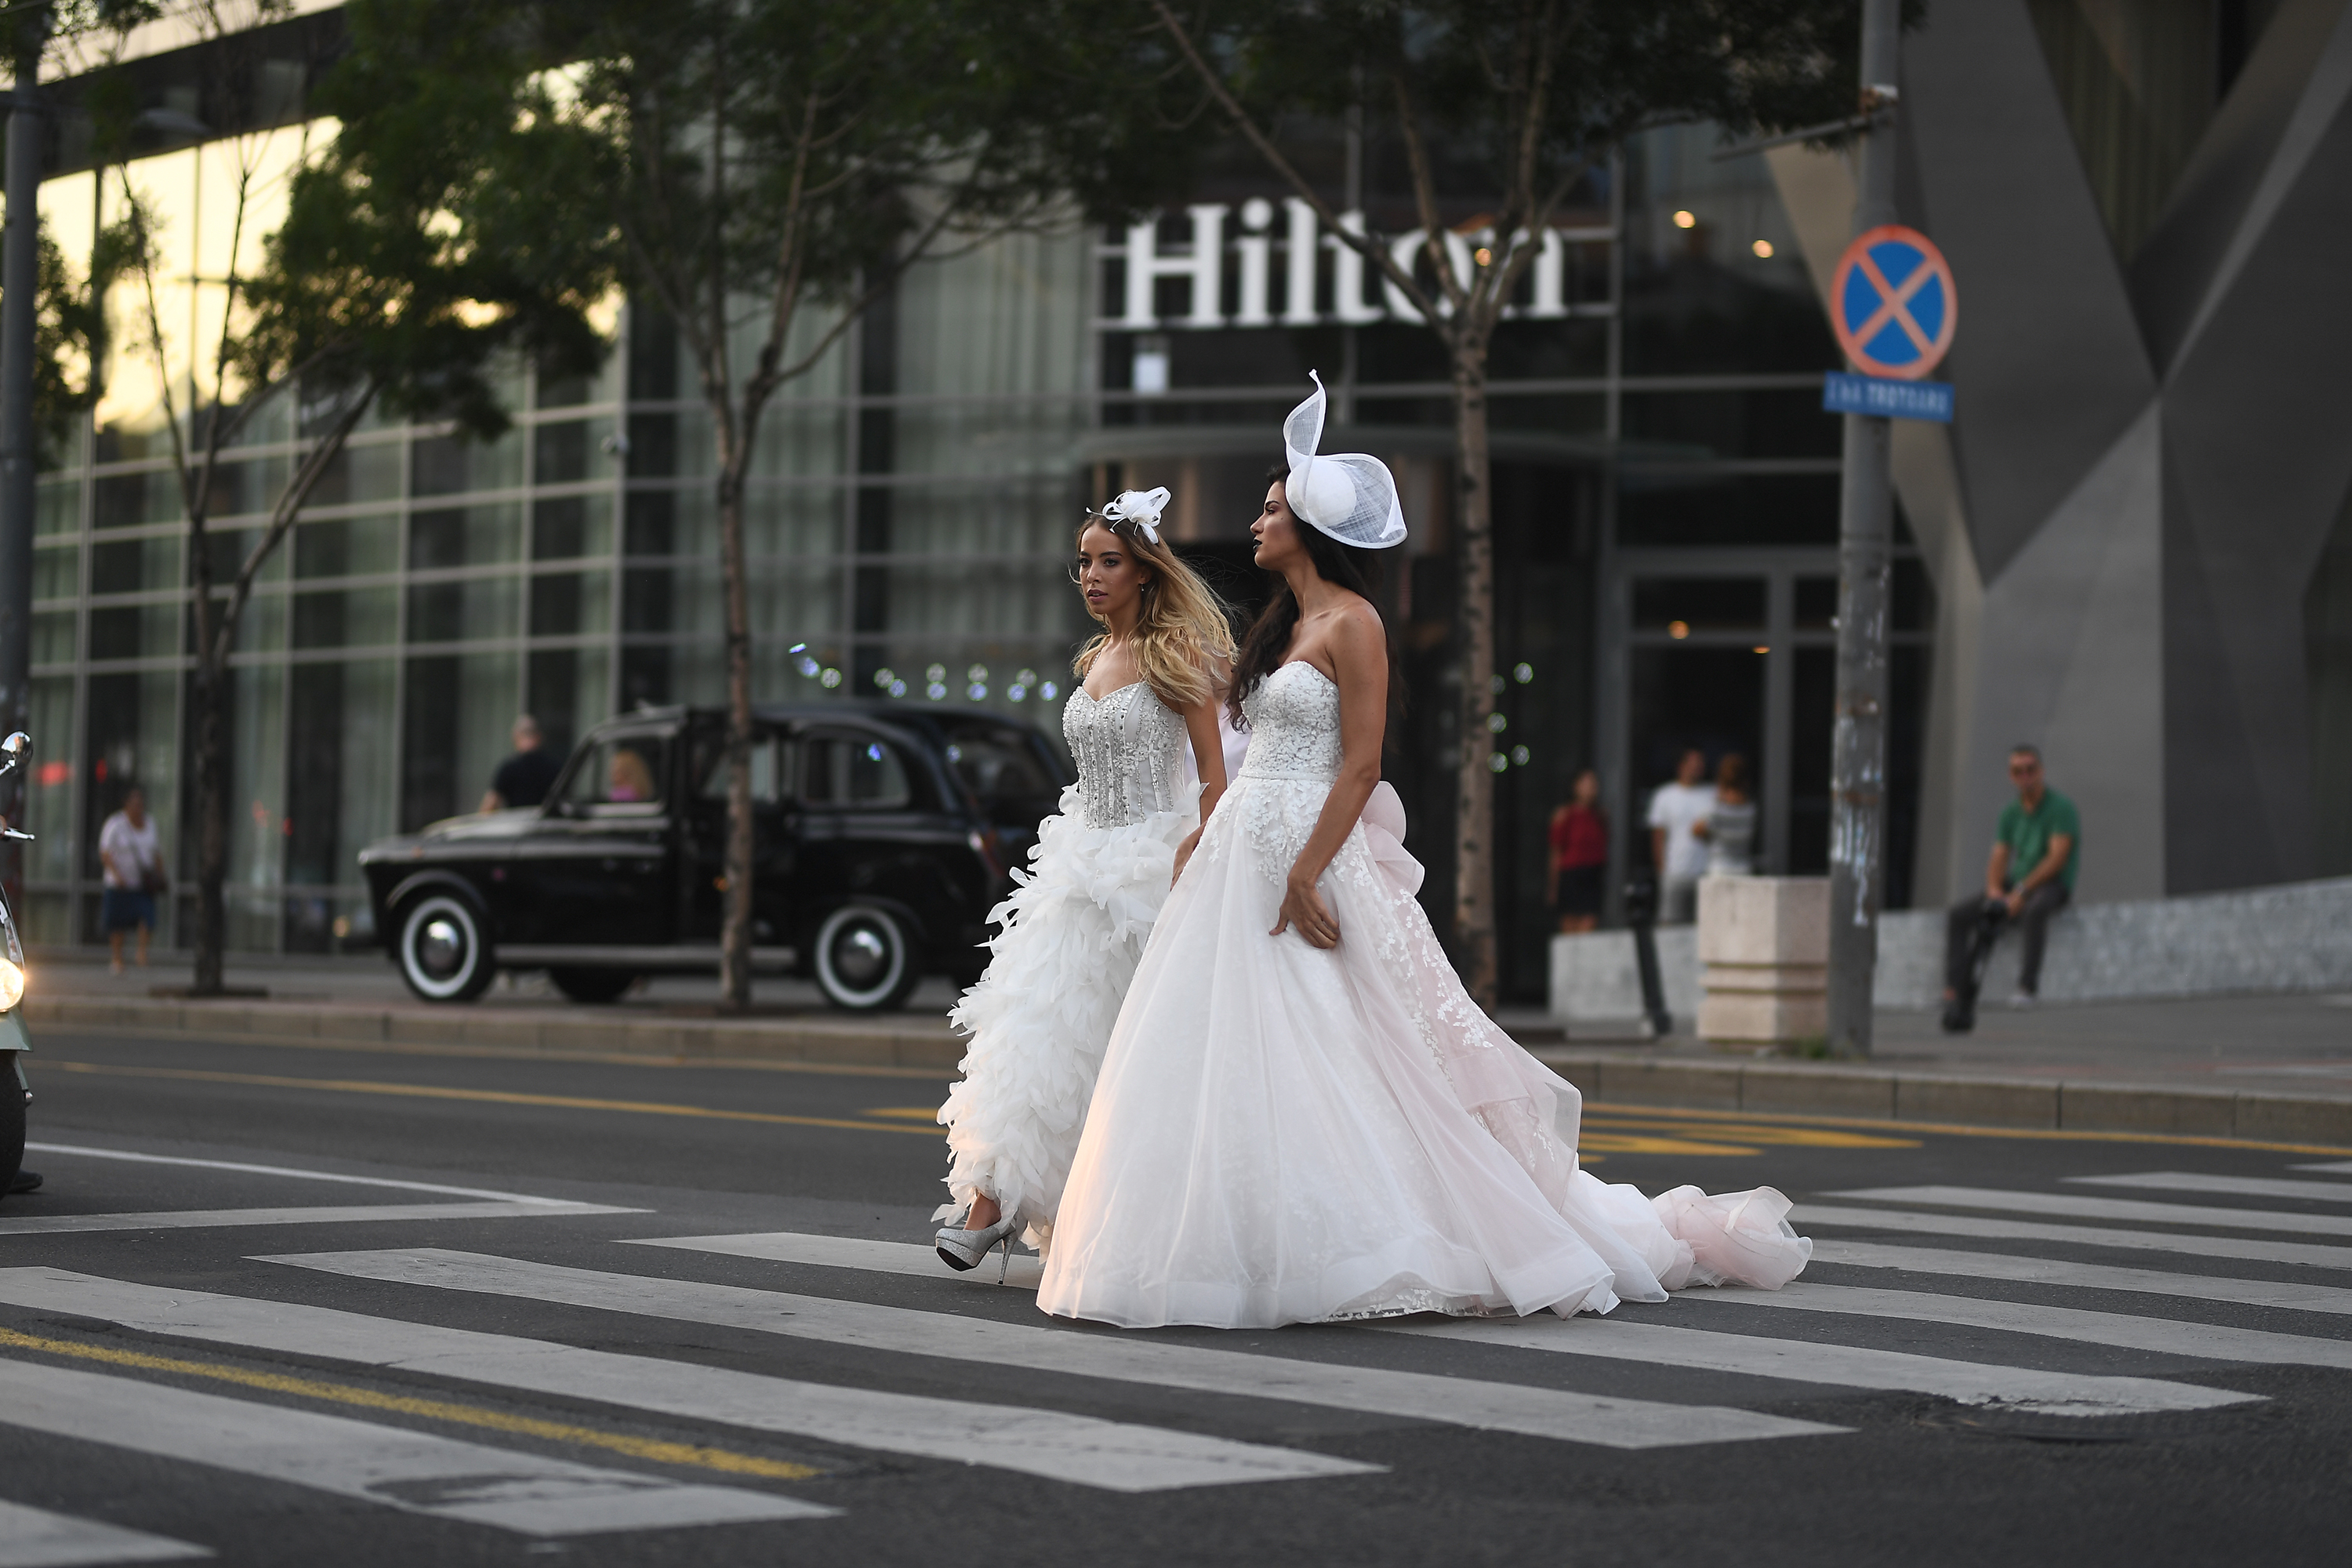 Beogradski sajam venčanja nudi lek protiv stresa mladenaca